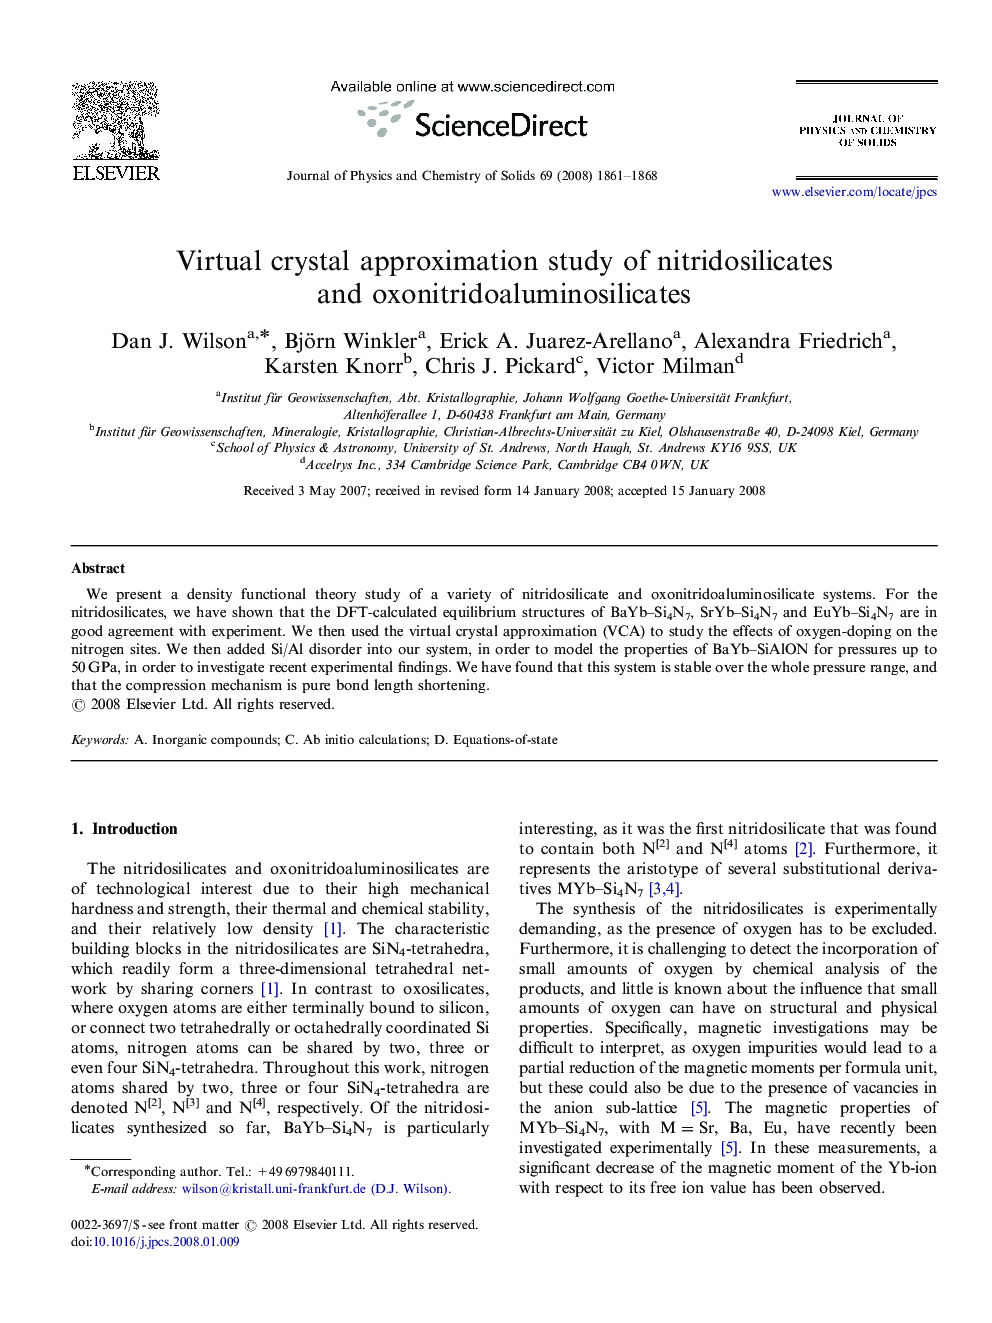 Virtual crystal approximation study of nitridosilicates and oxonitridoaluminosilicates